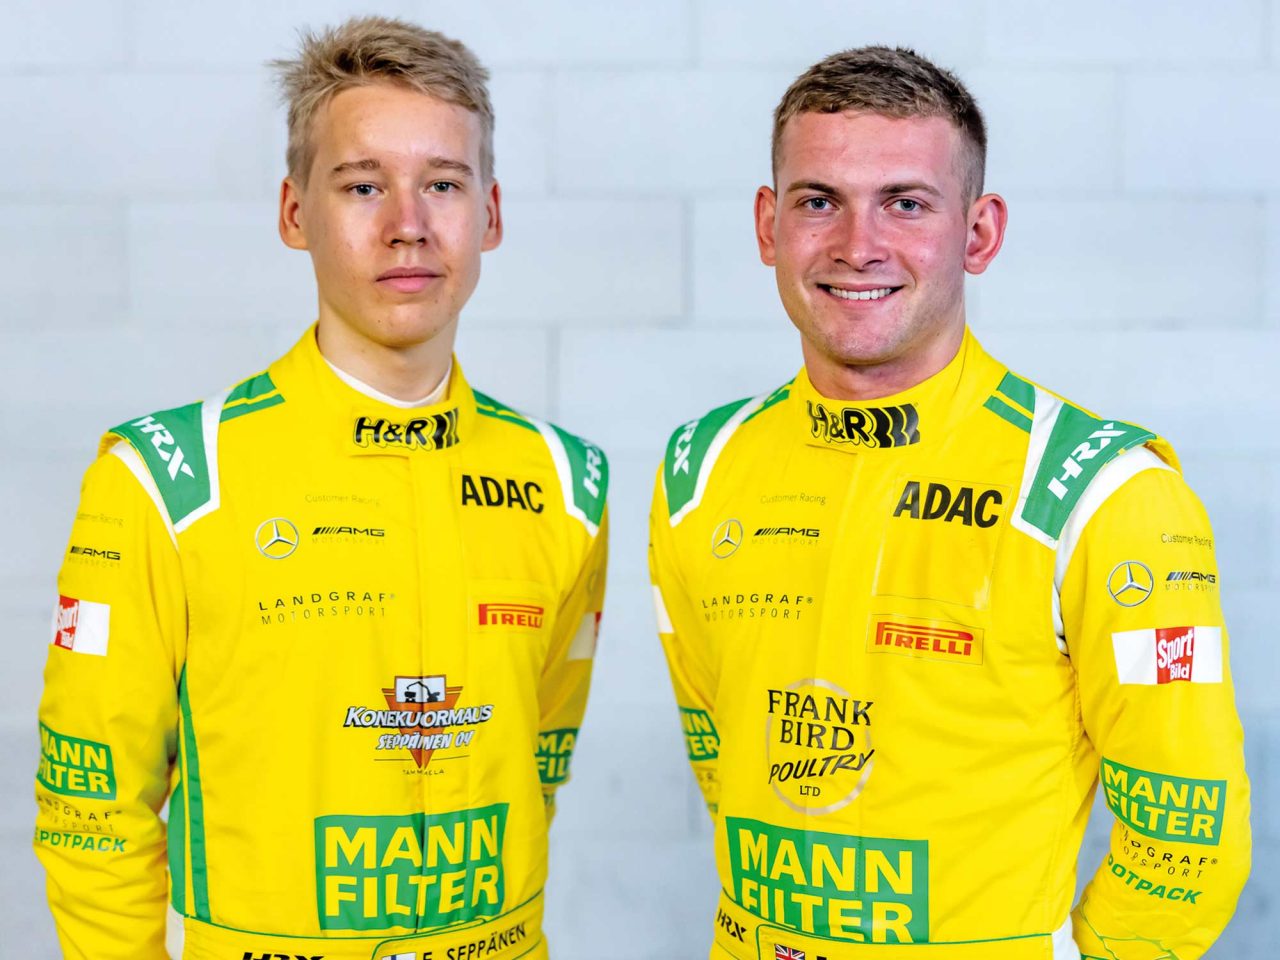 The MANN-FILTER Junior Mamba drivers Frank Bird and Elias Seppänen in yellow racing suits